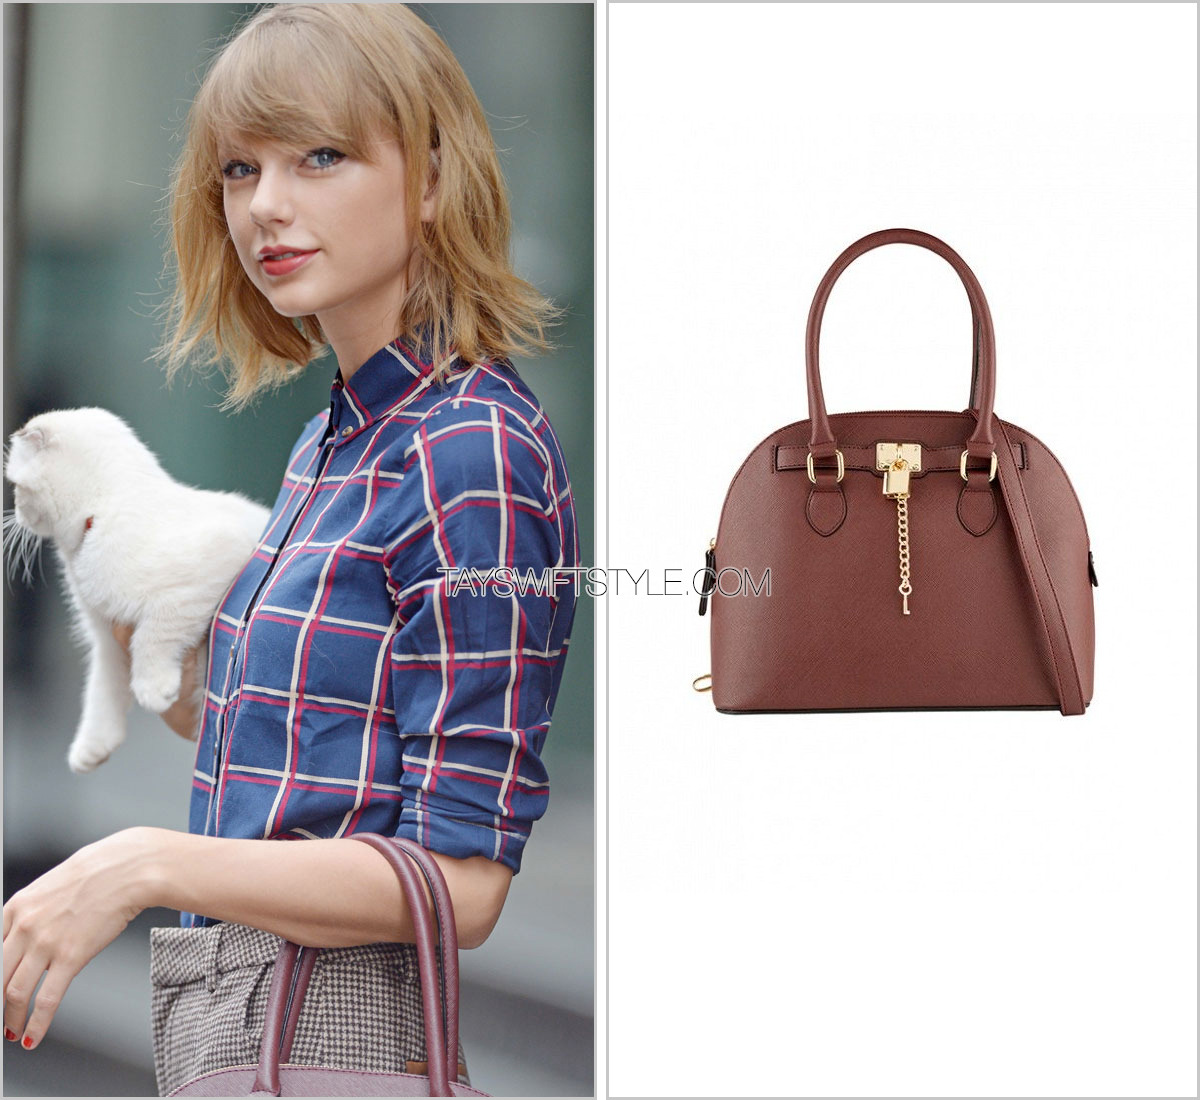 Taylor Swift's Aldo Bag